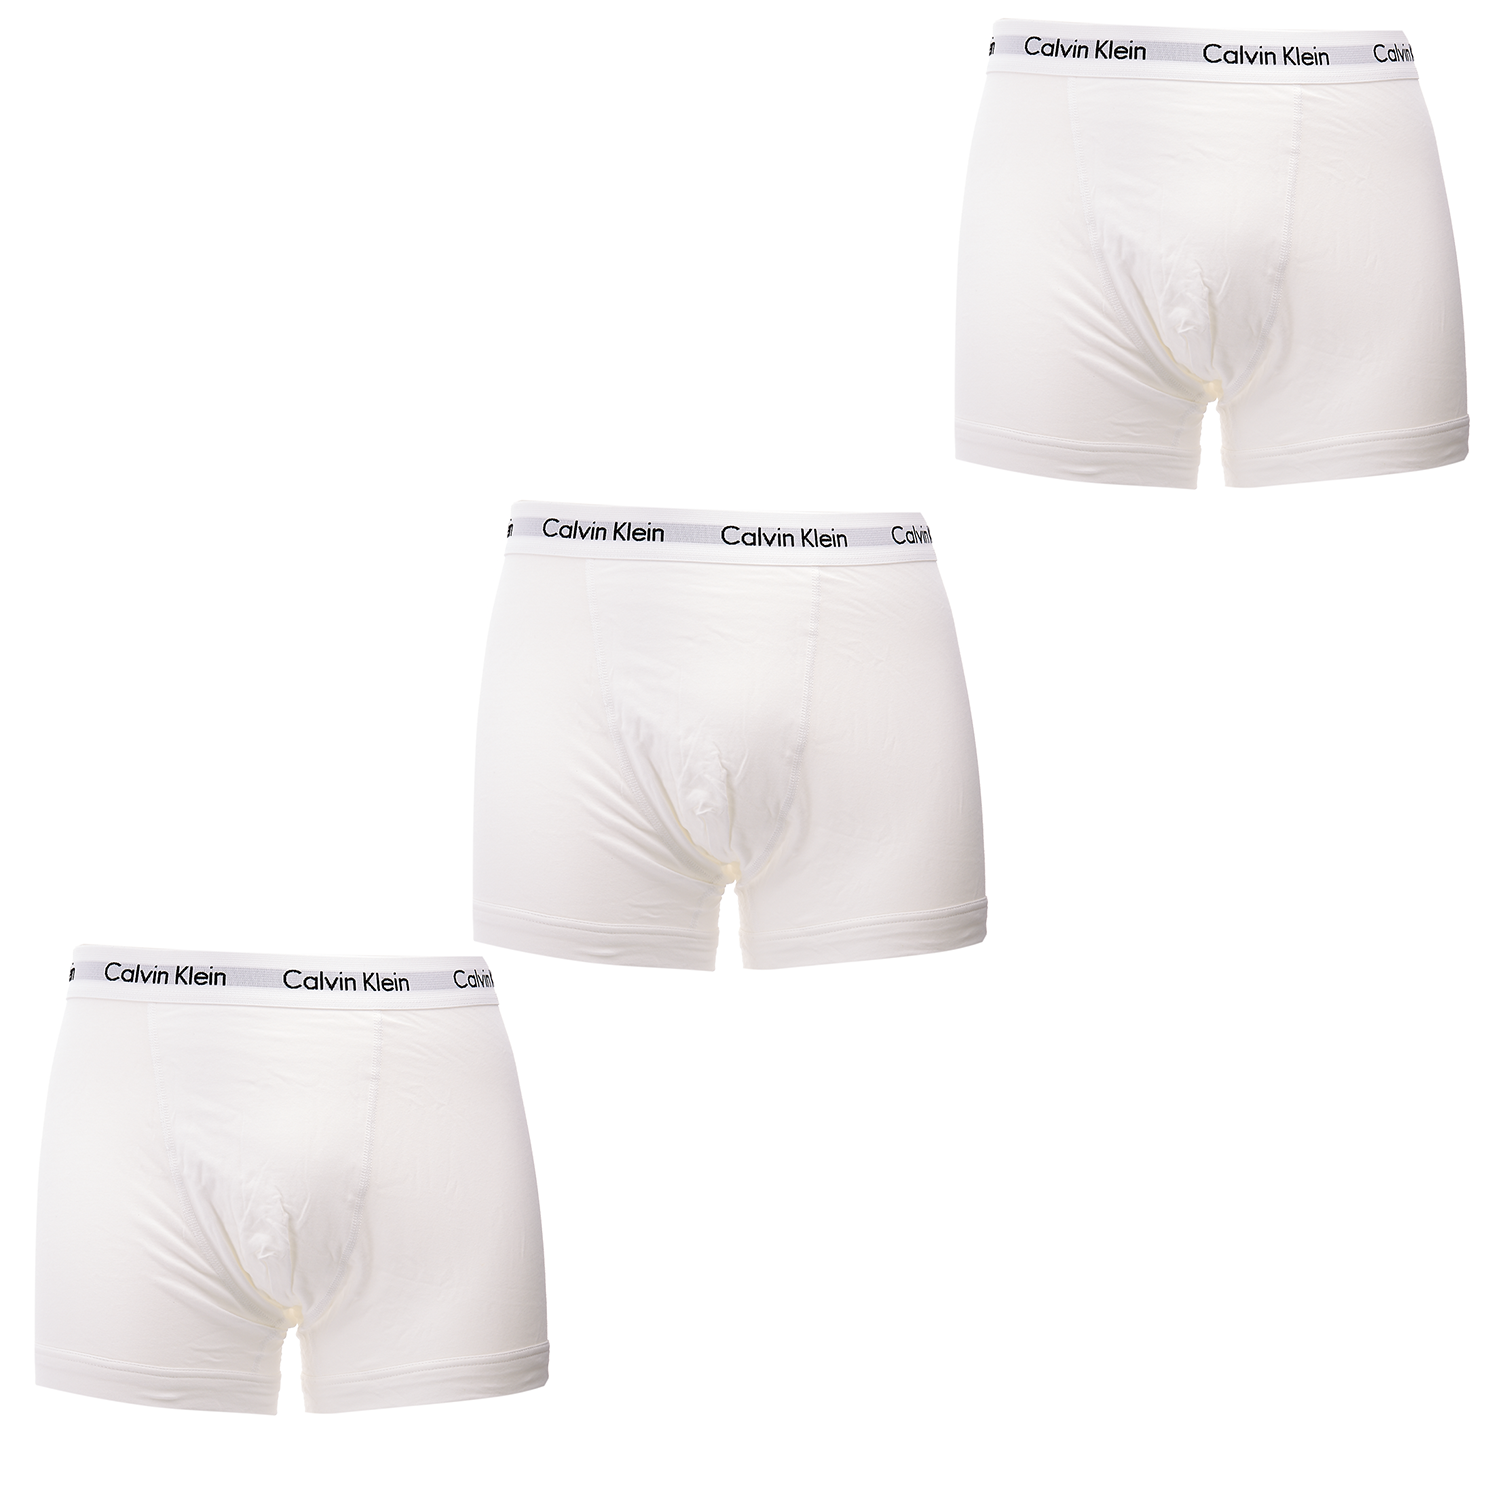 CK UNDERWEAR - Σετ μπόξερ Calvin Klein λευκά Ανδρικά/Ρούχα/Εσώρουχα/Μπόξερ